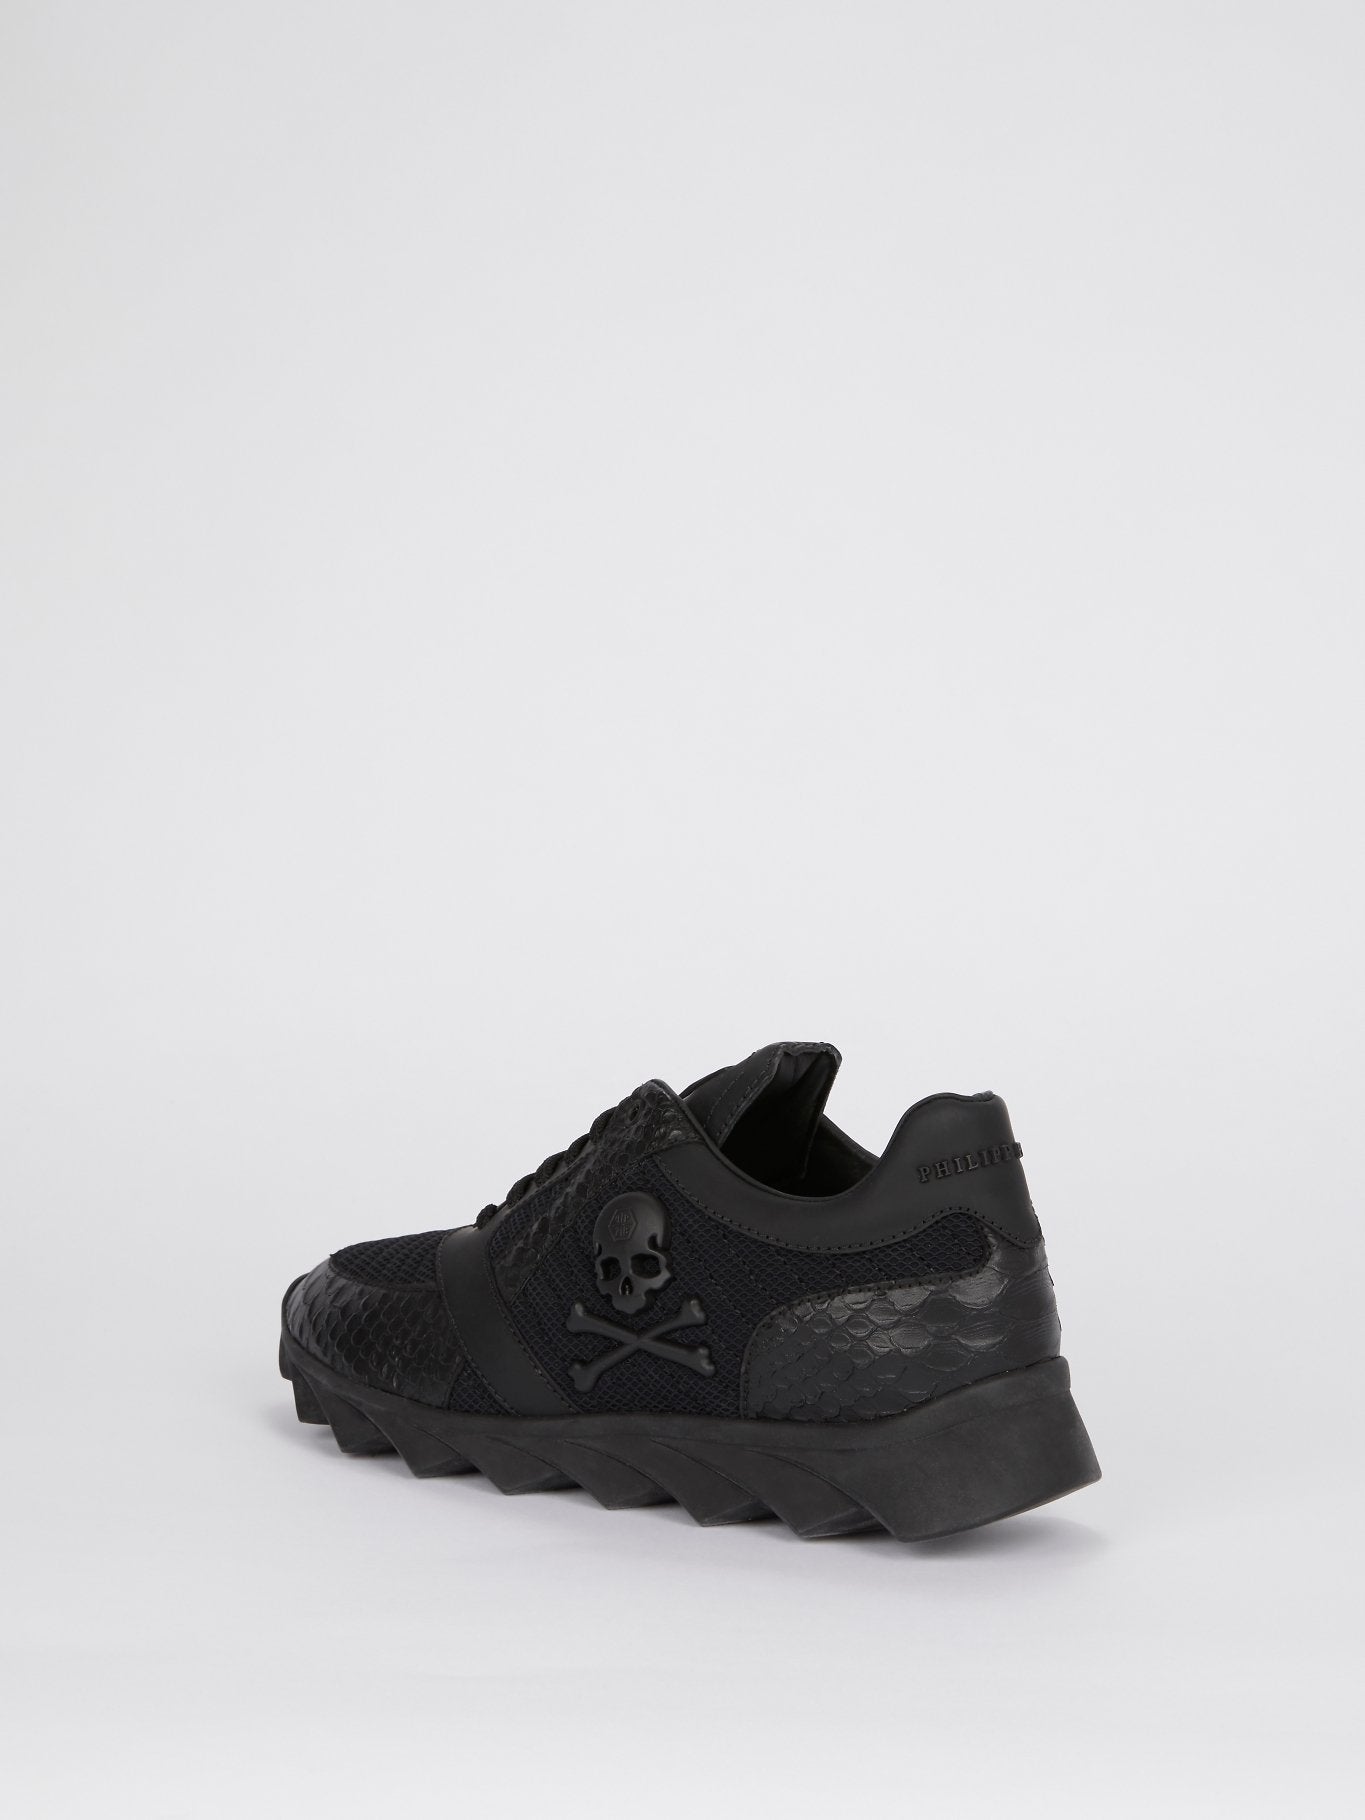 Black Crocodile Panel Mesh Sneakers